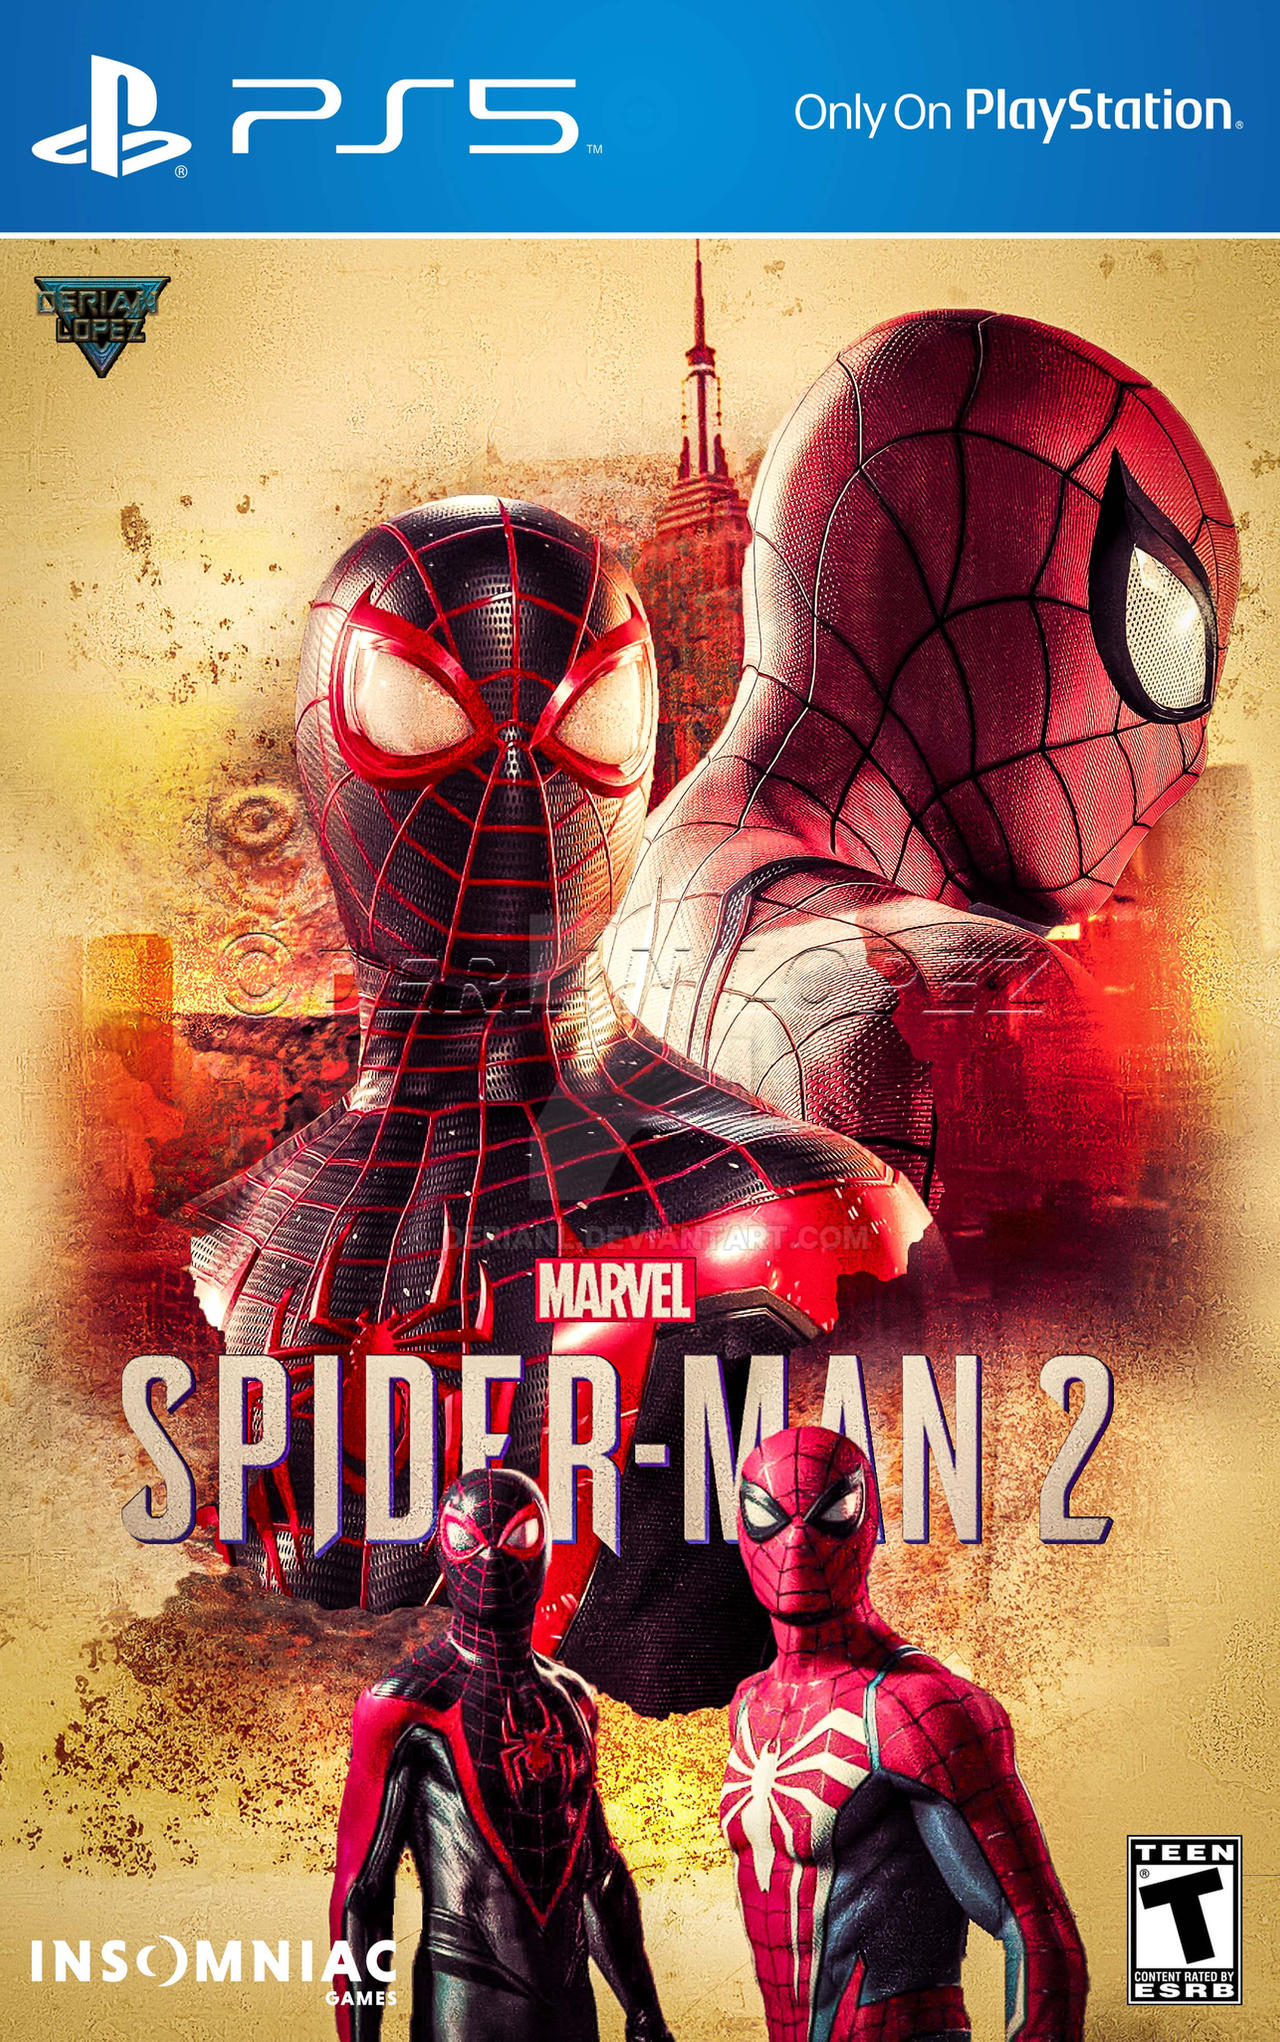 Marvel's Spider-Man 2 PS5 Cover Mock Up by derianl on DeviantArt